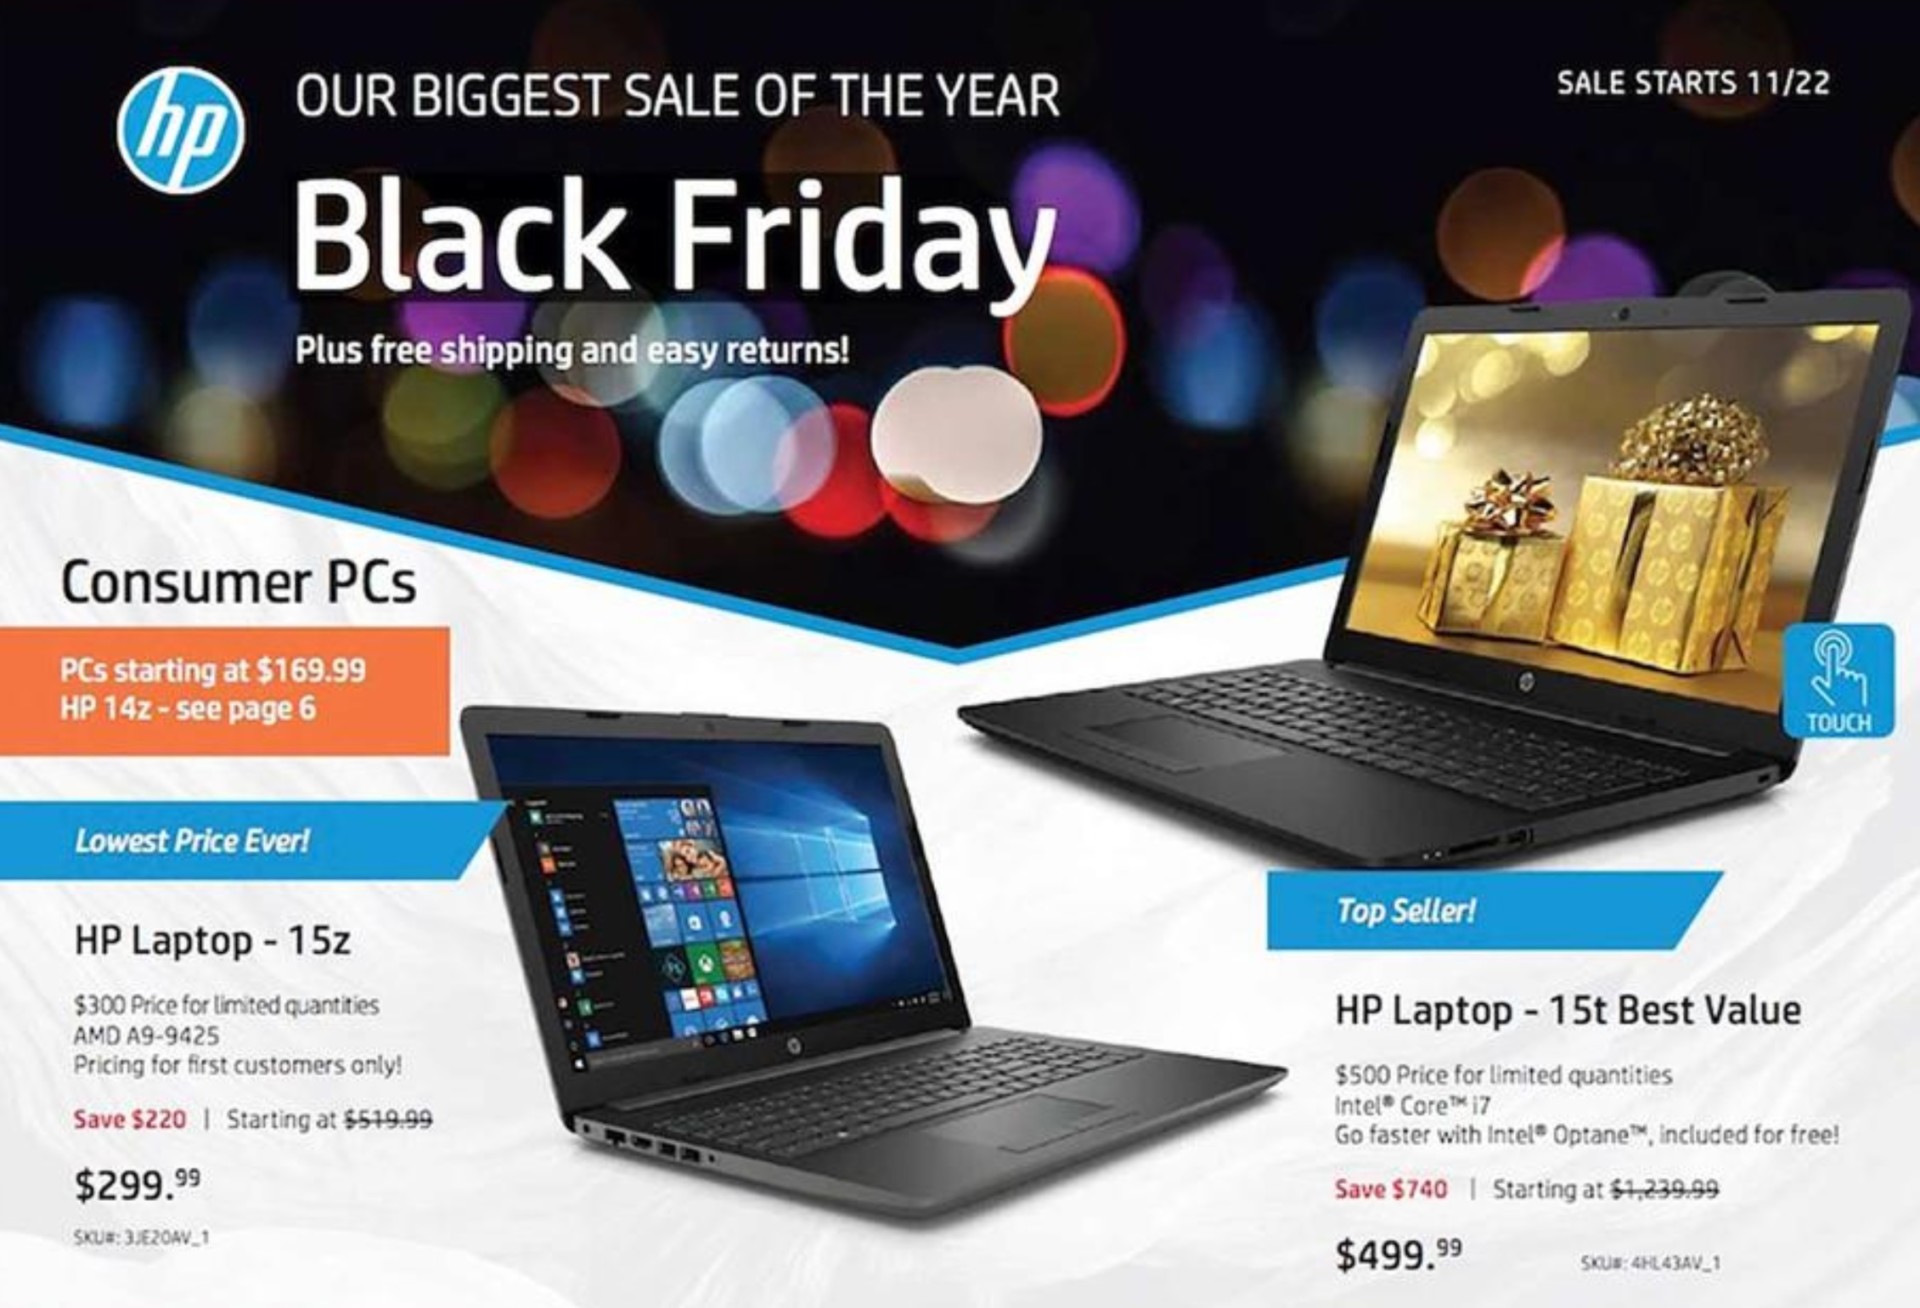 HP Black Friday deals promo poster.